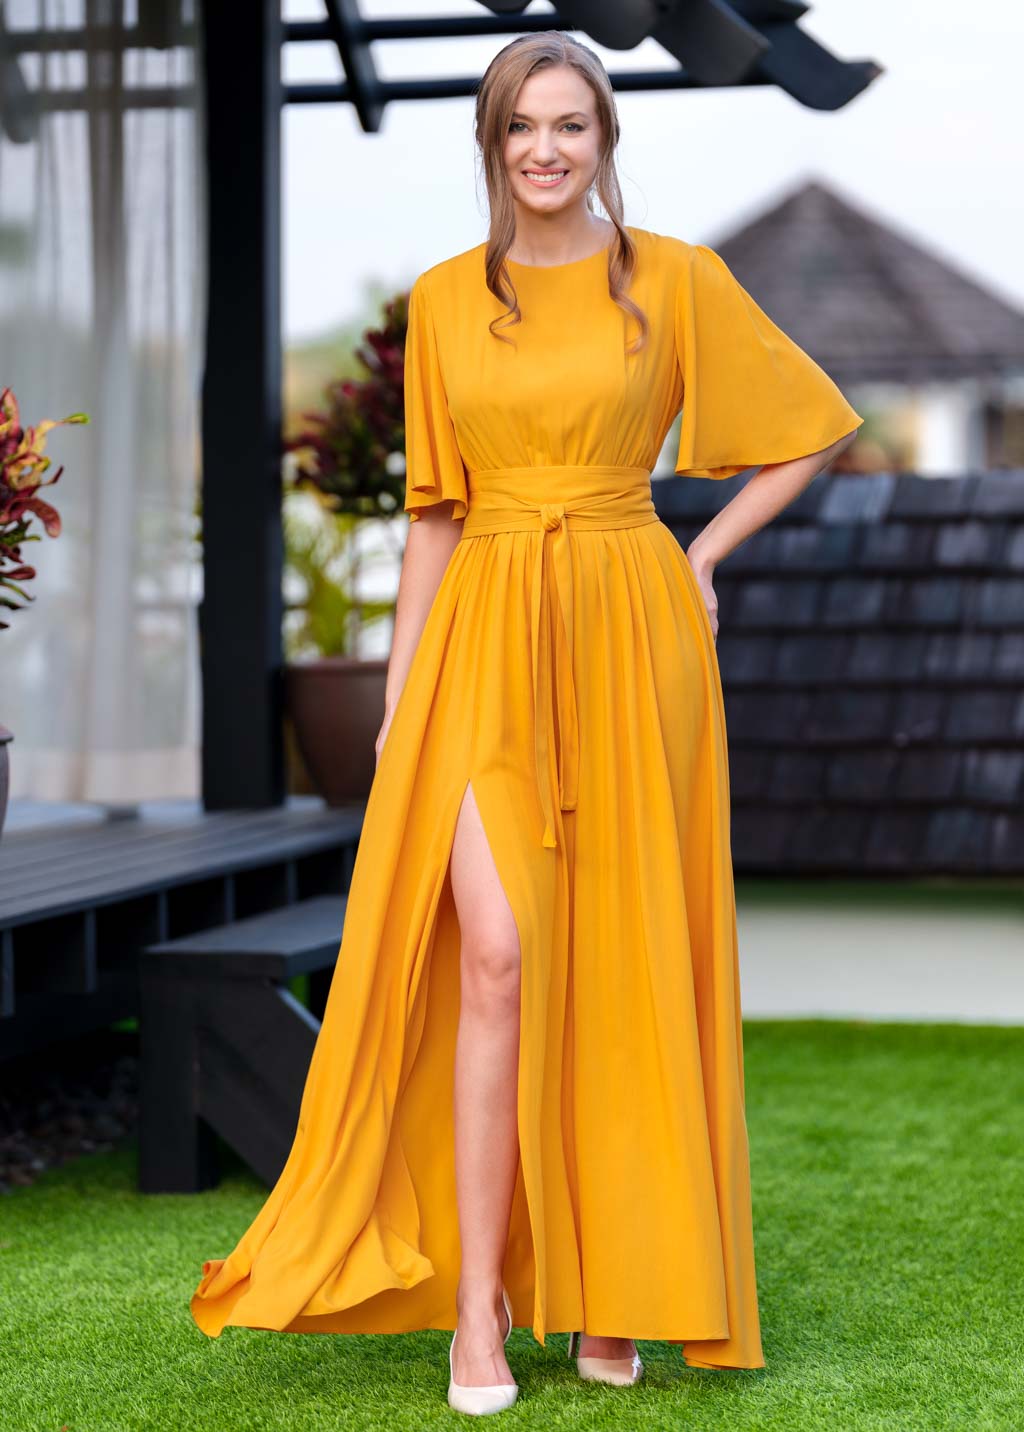 Honey yellow long dress with belt